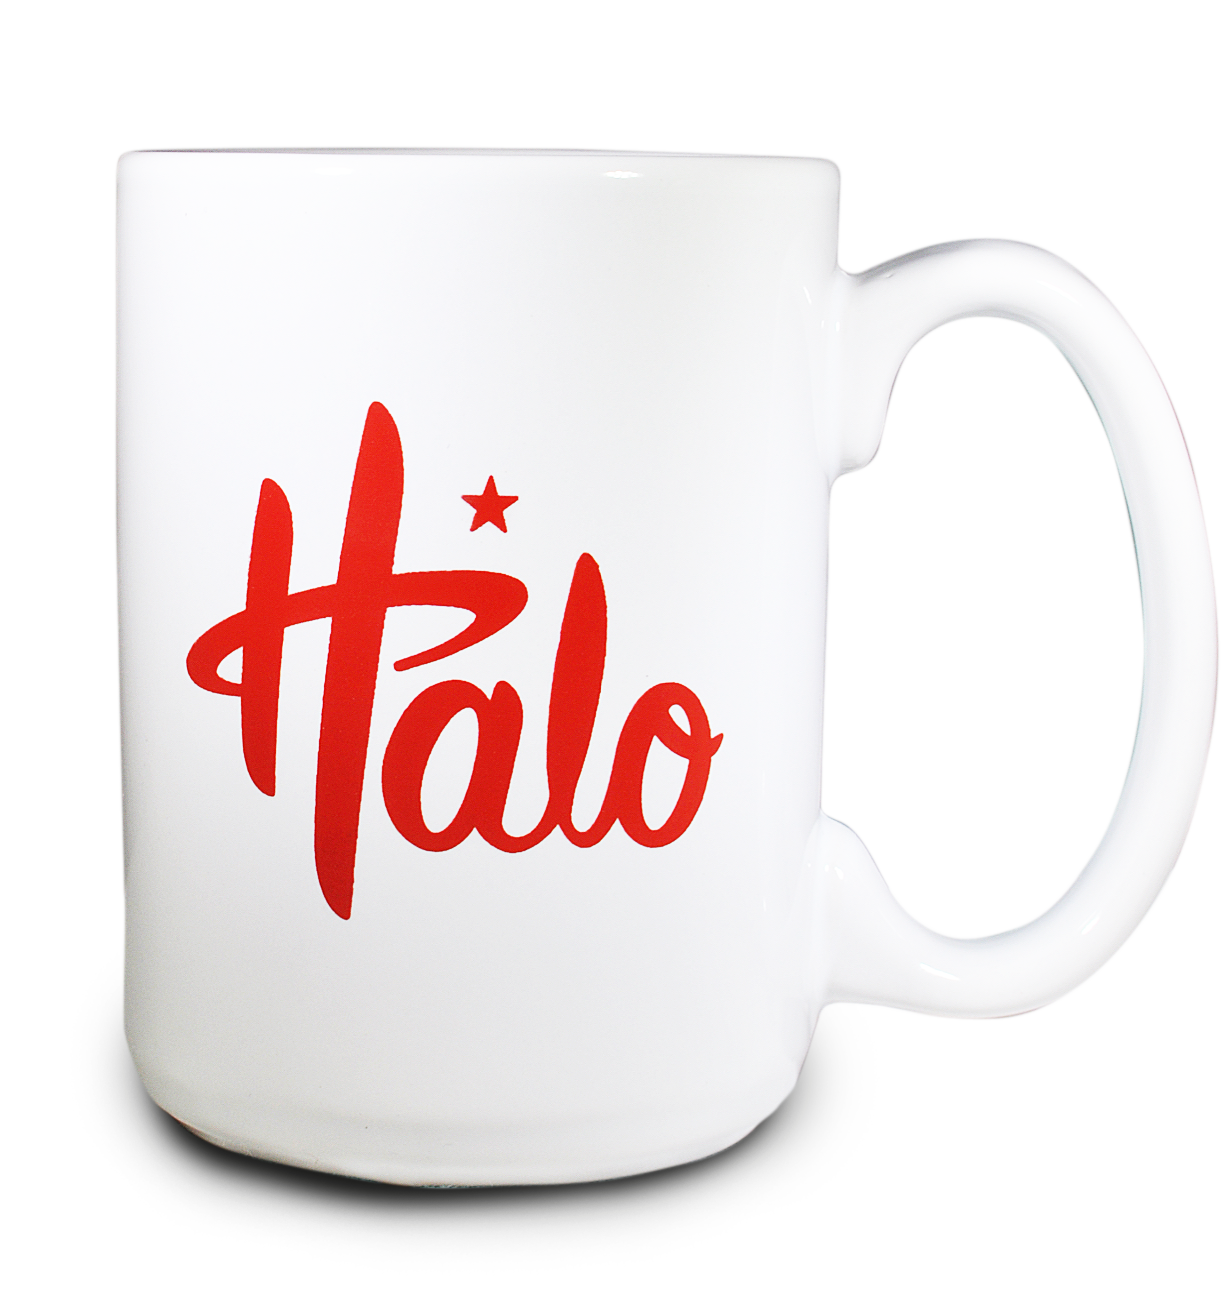 Halo Coffee Mug